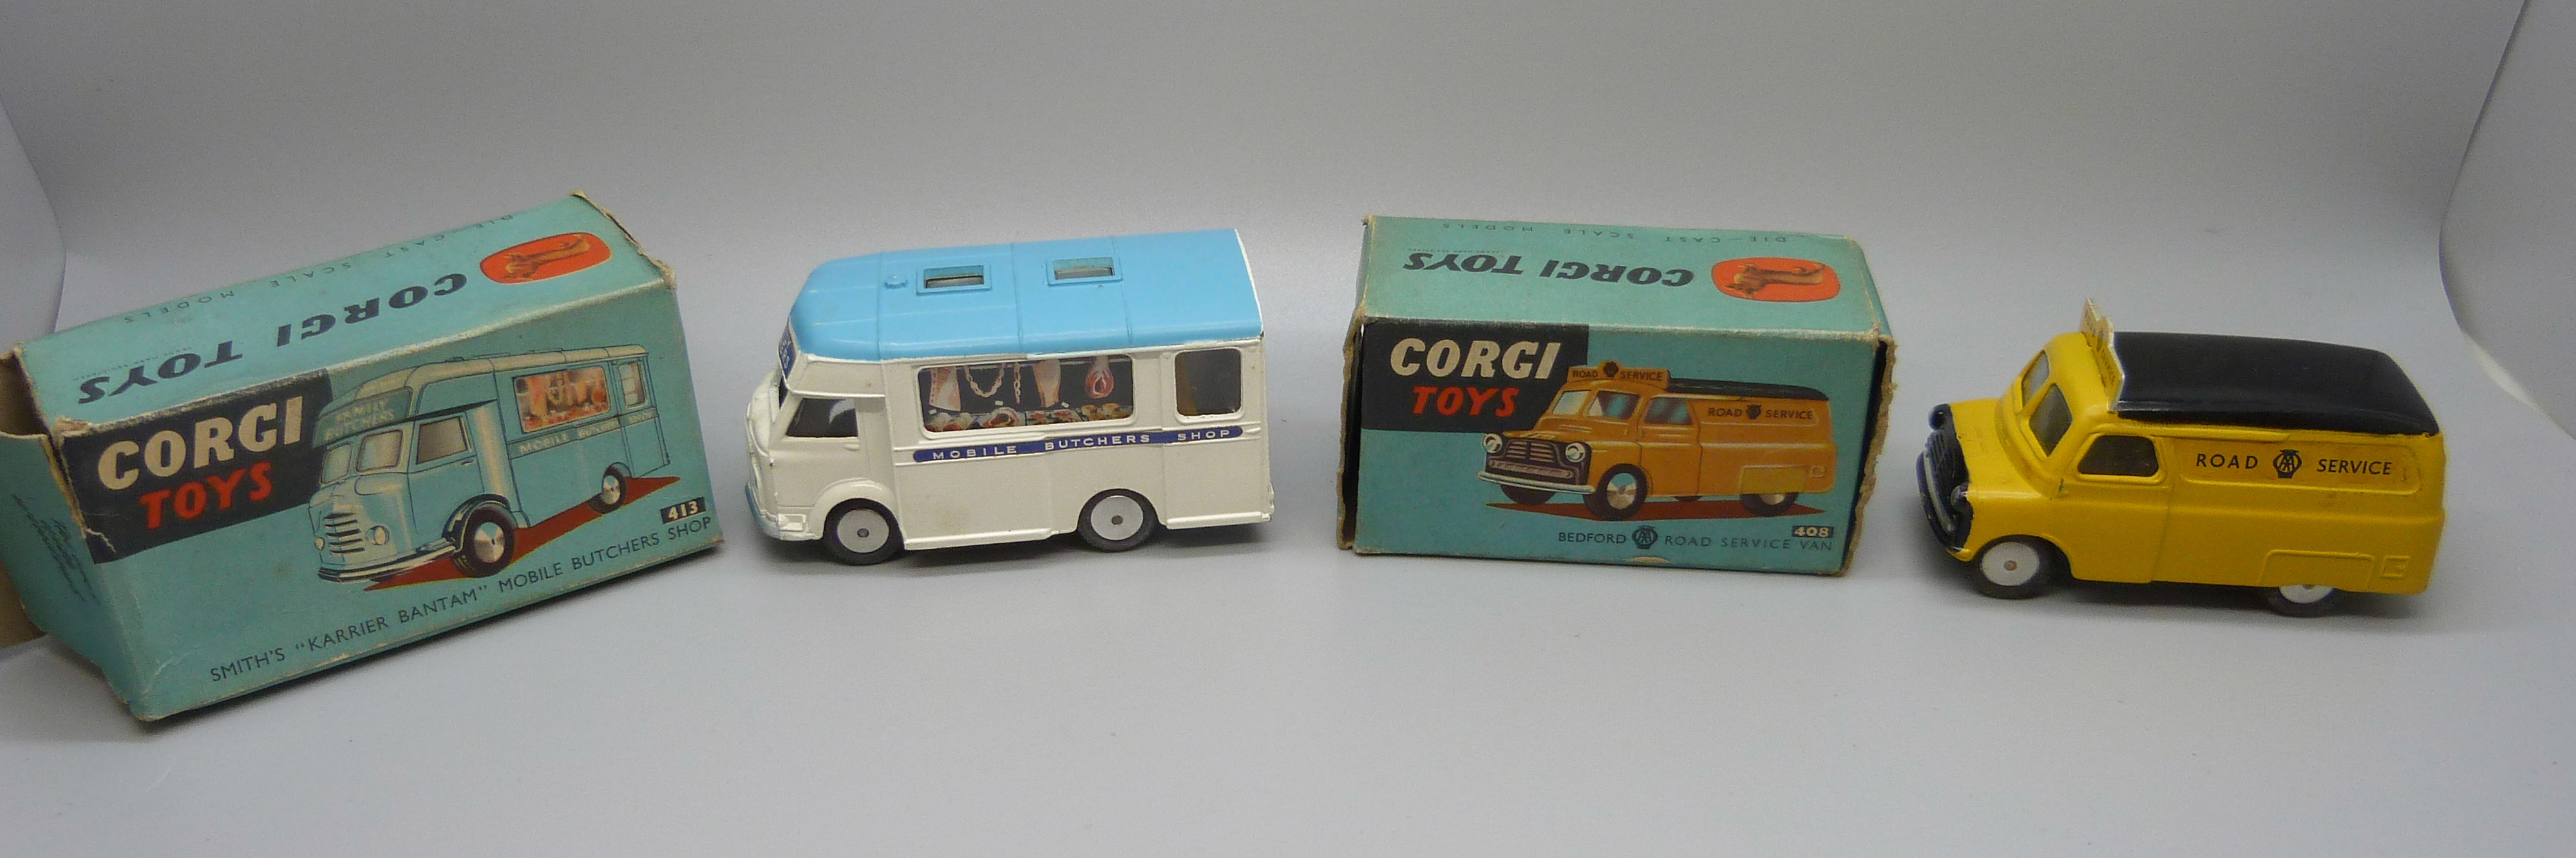 Two Corgi Toys, 408 Bedford Road Service Van and 413 Smith's Karrier Bantam Mobile Butchers Shop,